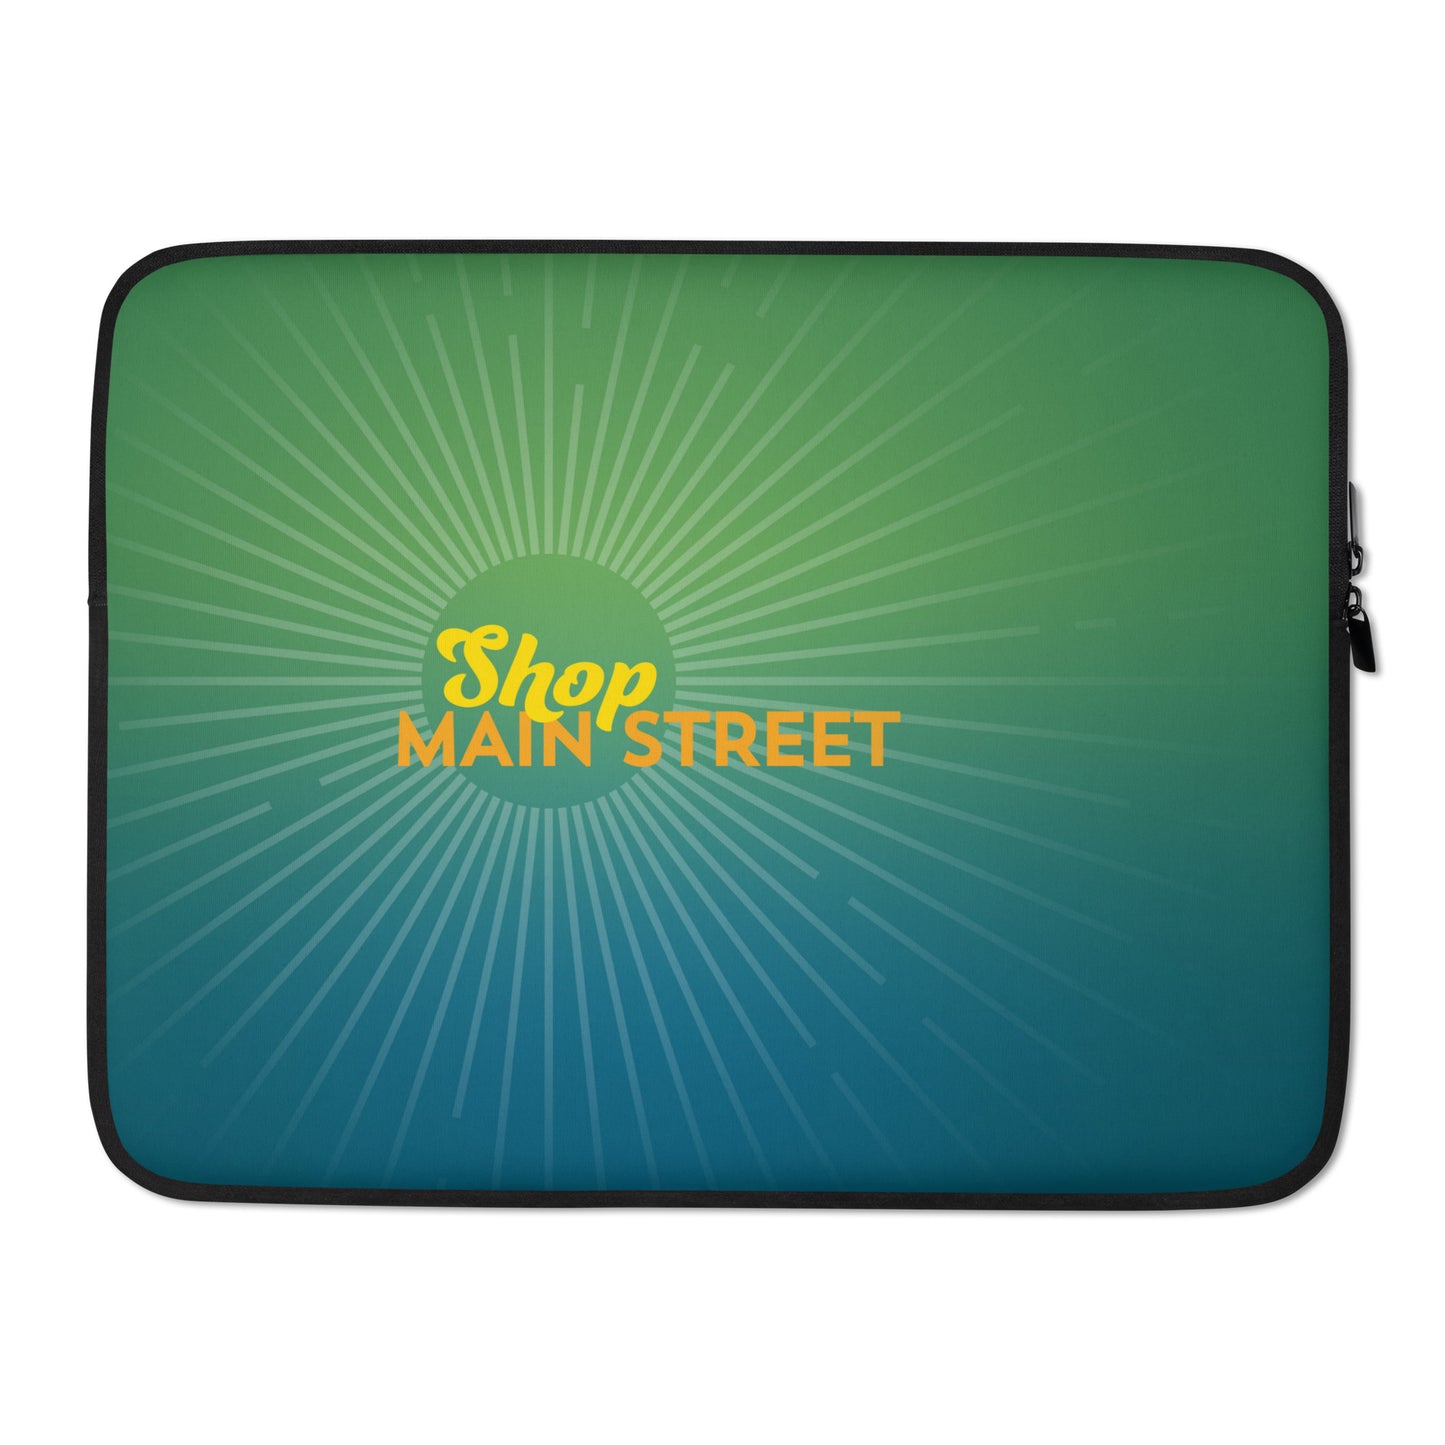 "Shop Main Street" Laptop Sleeve